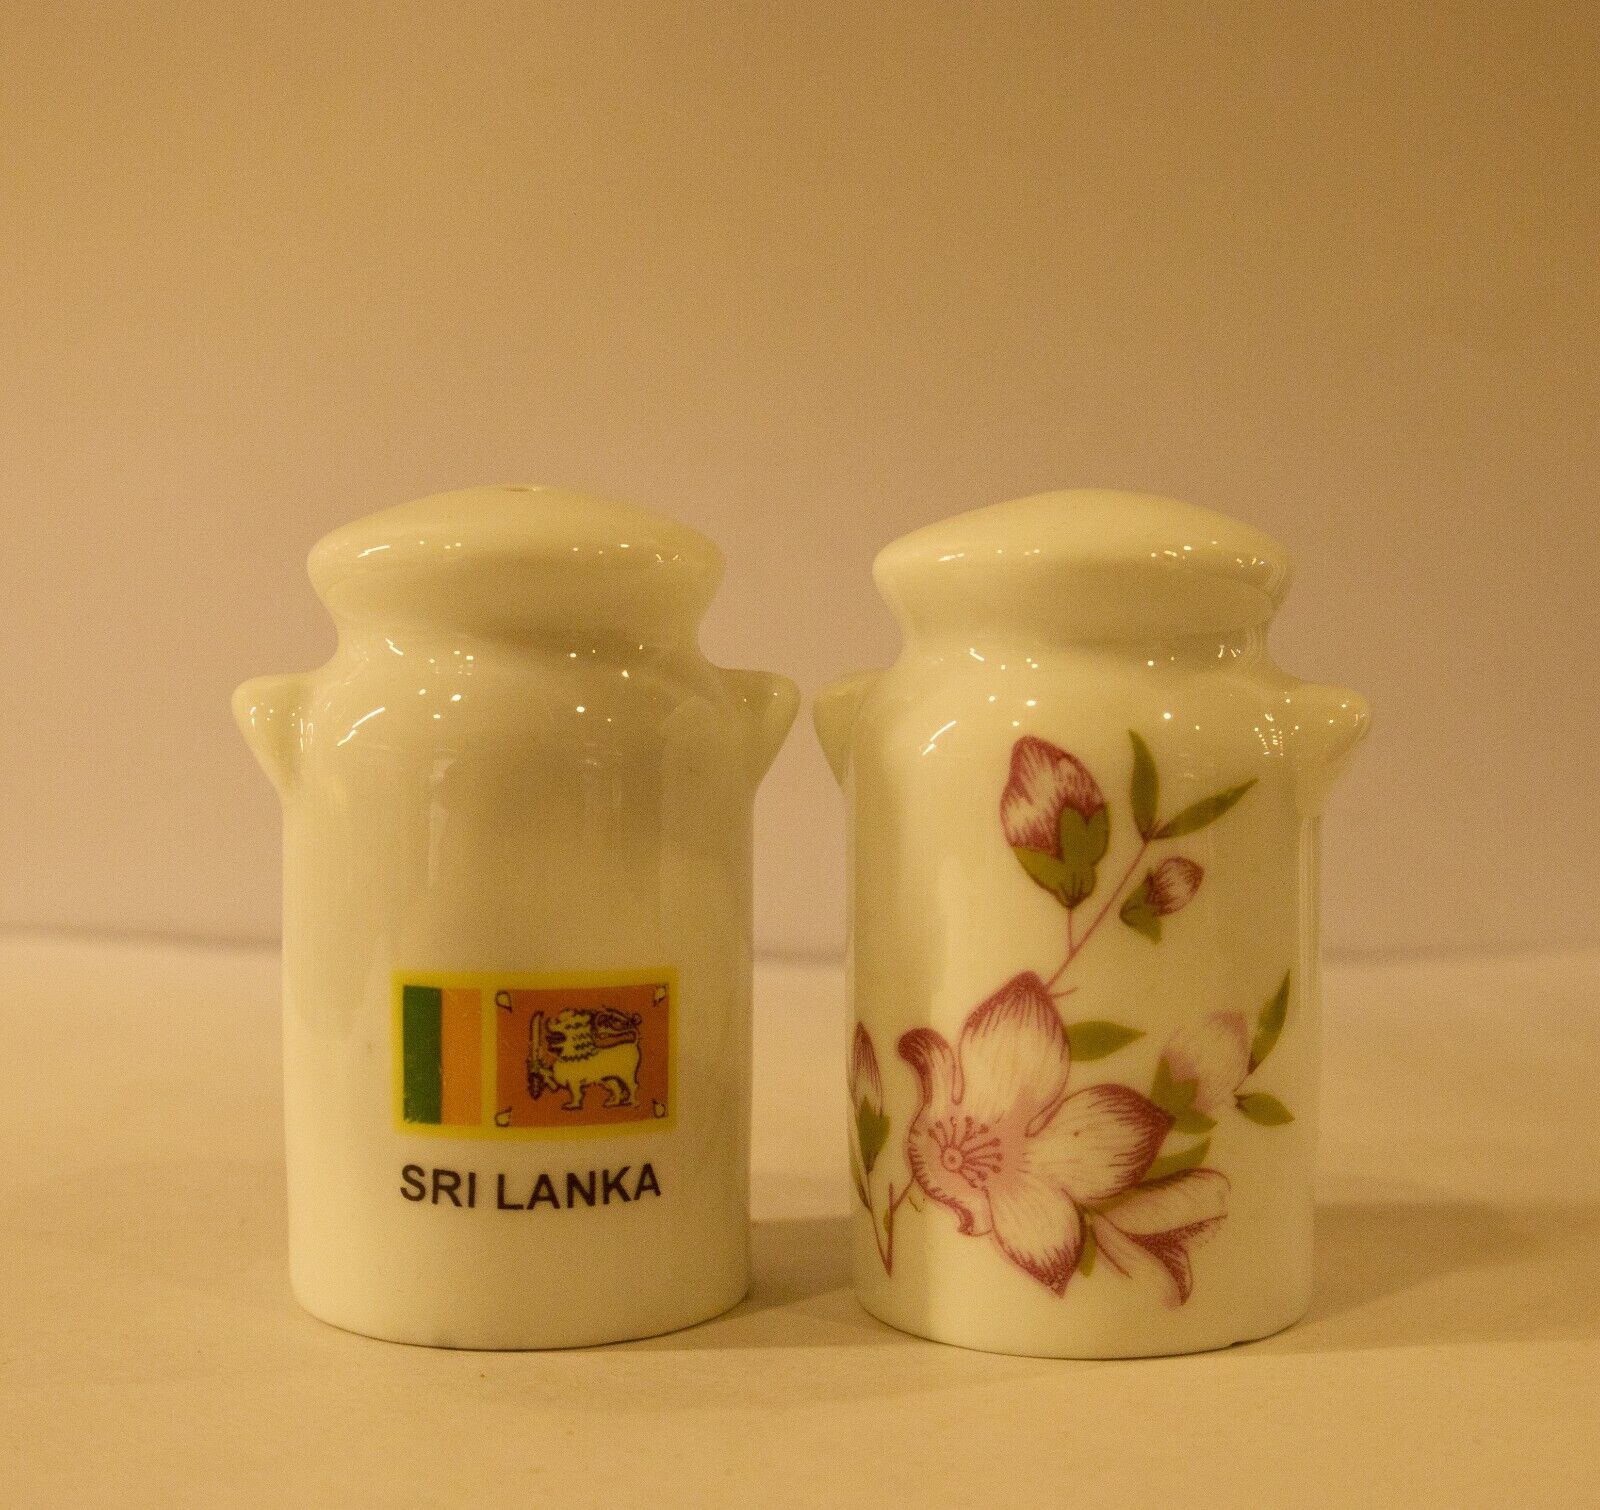 Cute Ceramic Salt and Pepper Shakers - Premium Home Decor Sri Lanka